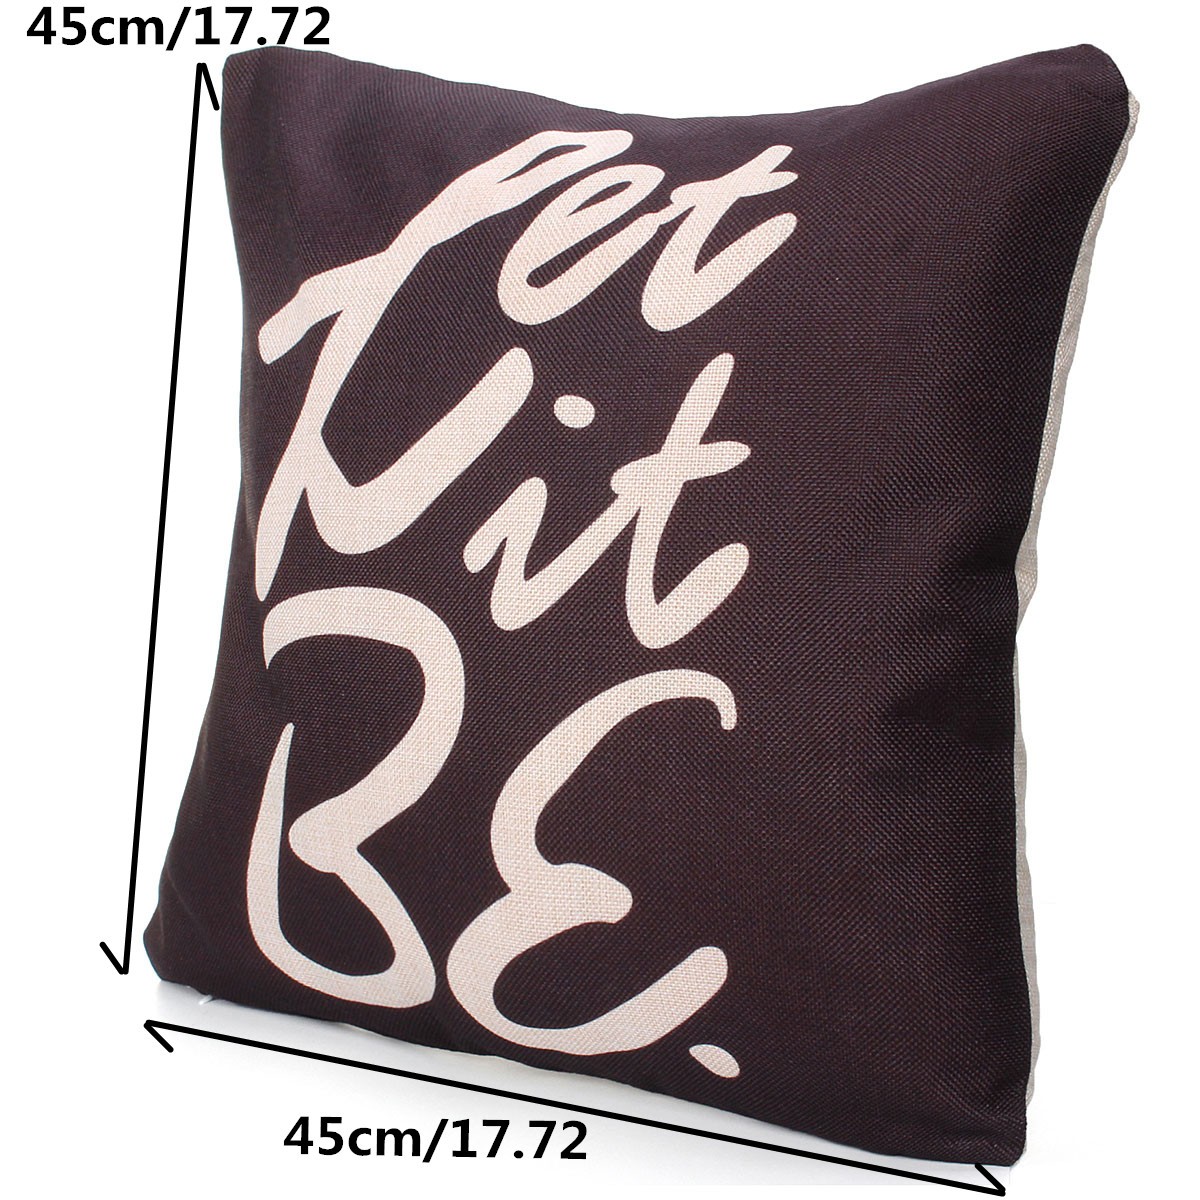 Square-English-Letter-Cotton-Linen-Pillow-Case-Throw-Cushion-Cover-Home-Decor-1053093-9